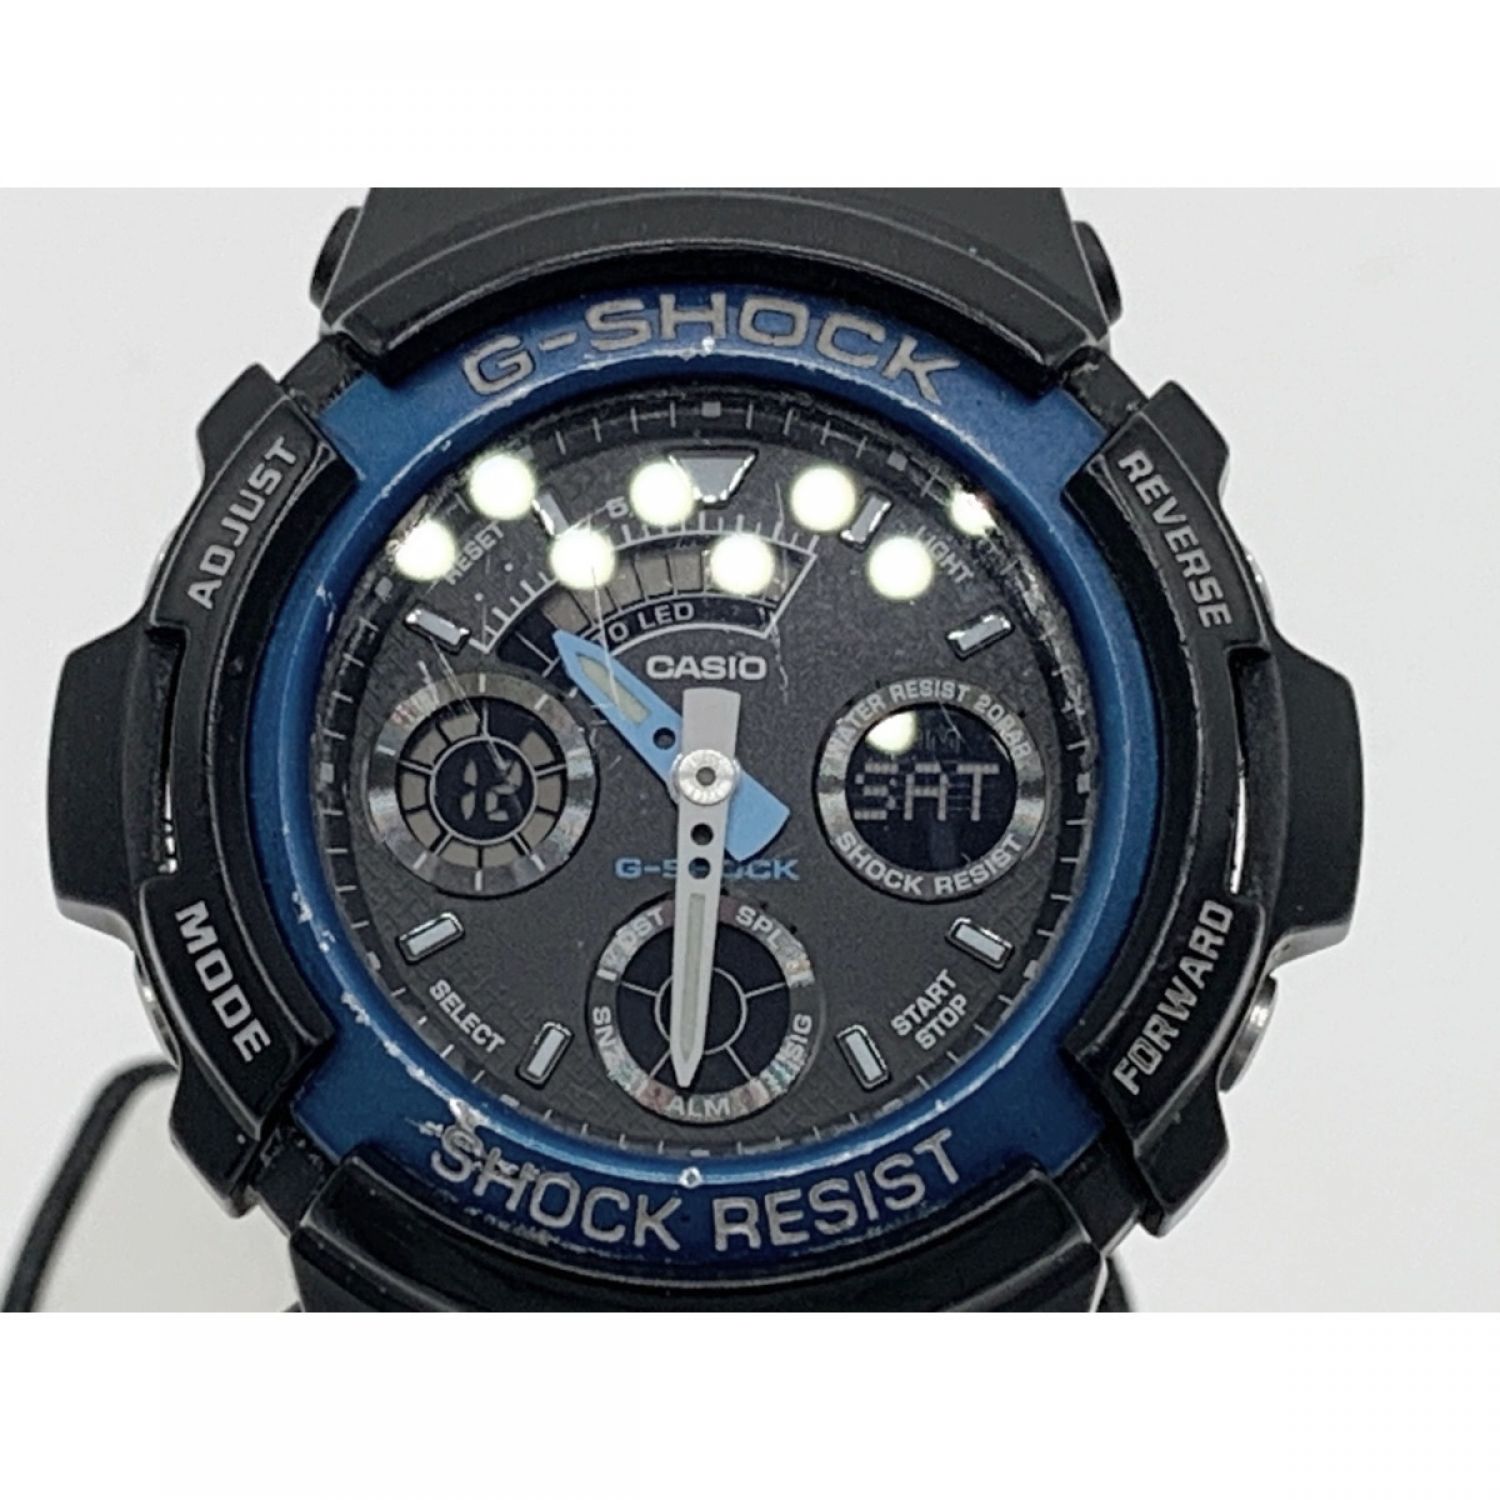 CASIO G-SHOCK Gショック AW-591-2AJF 腕時計